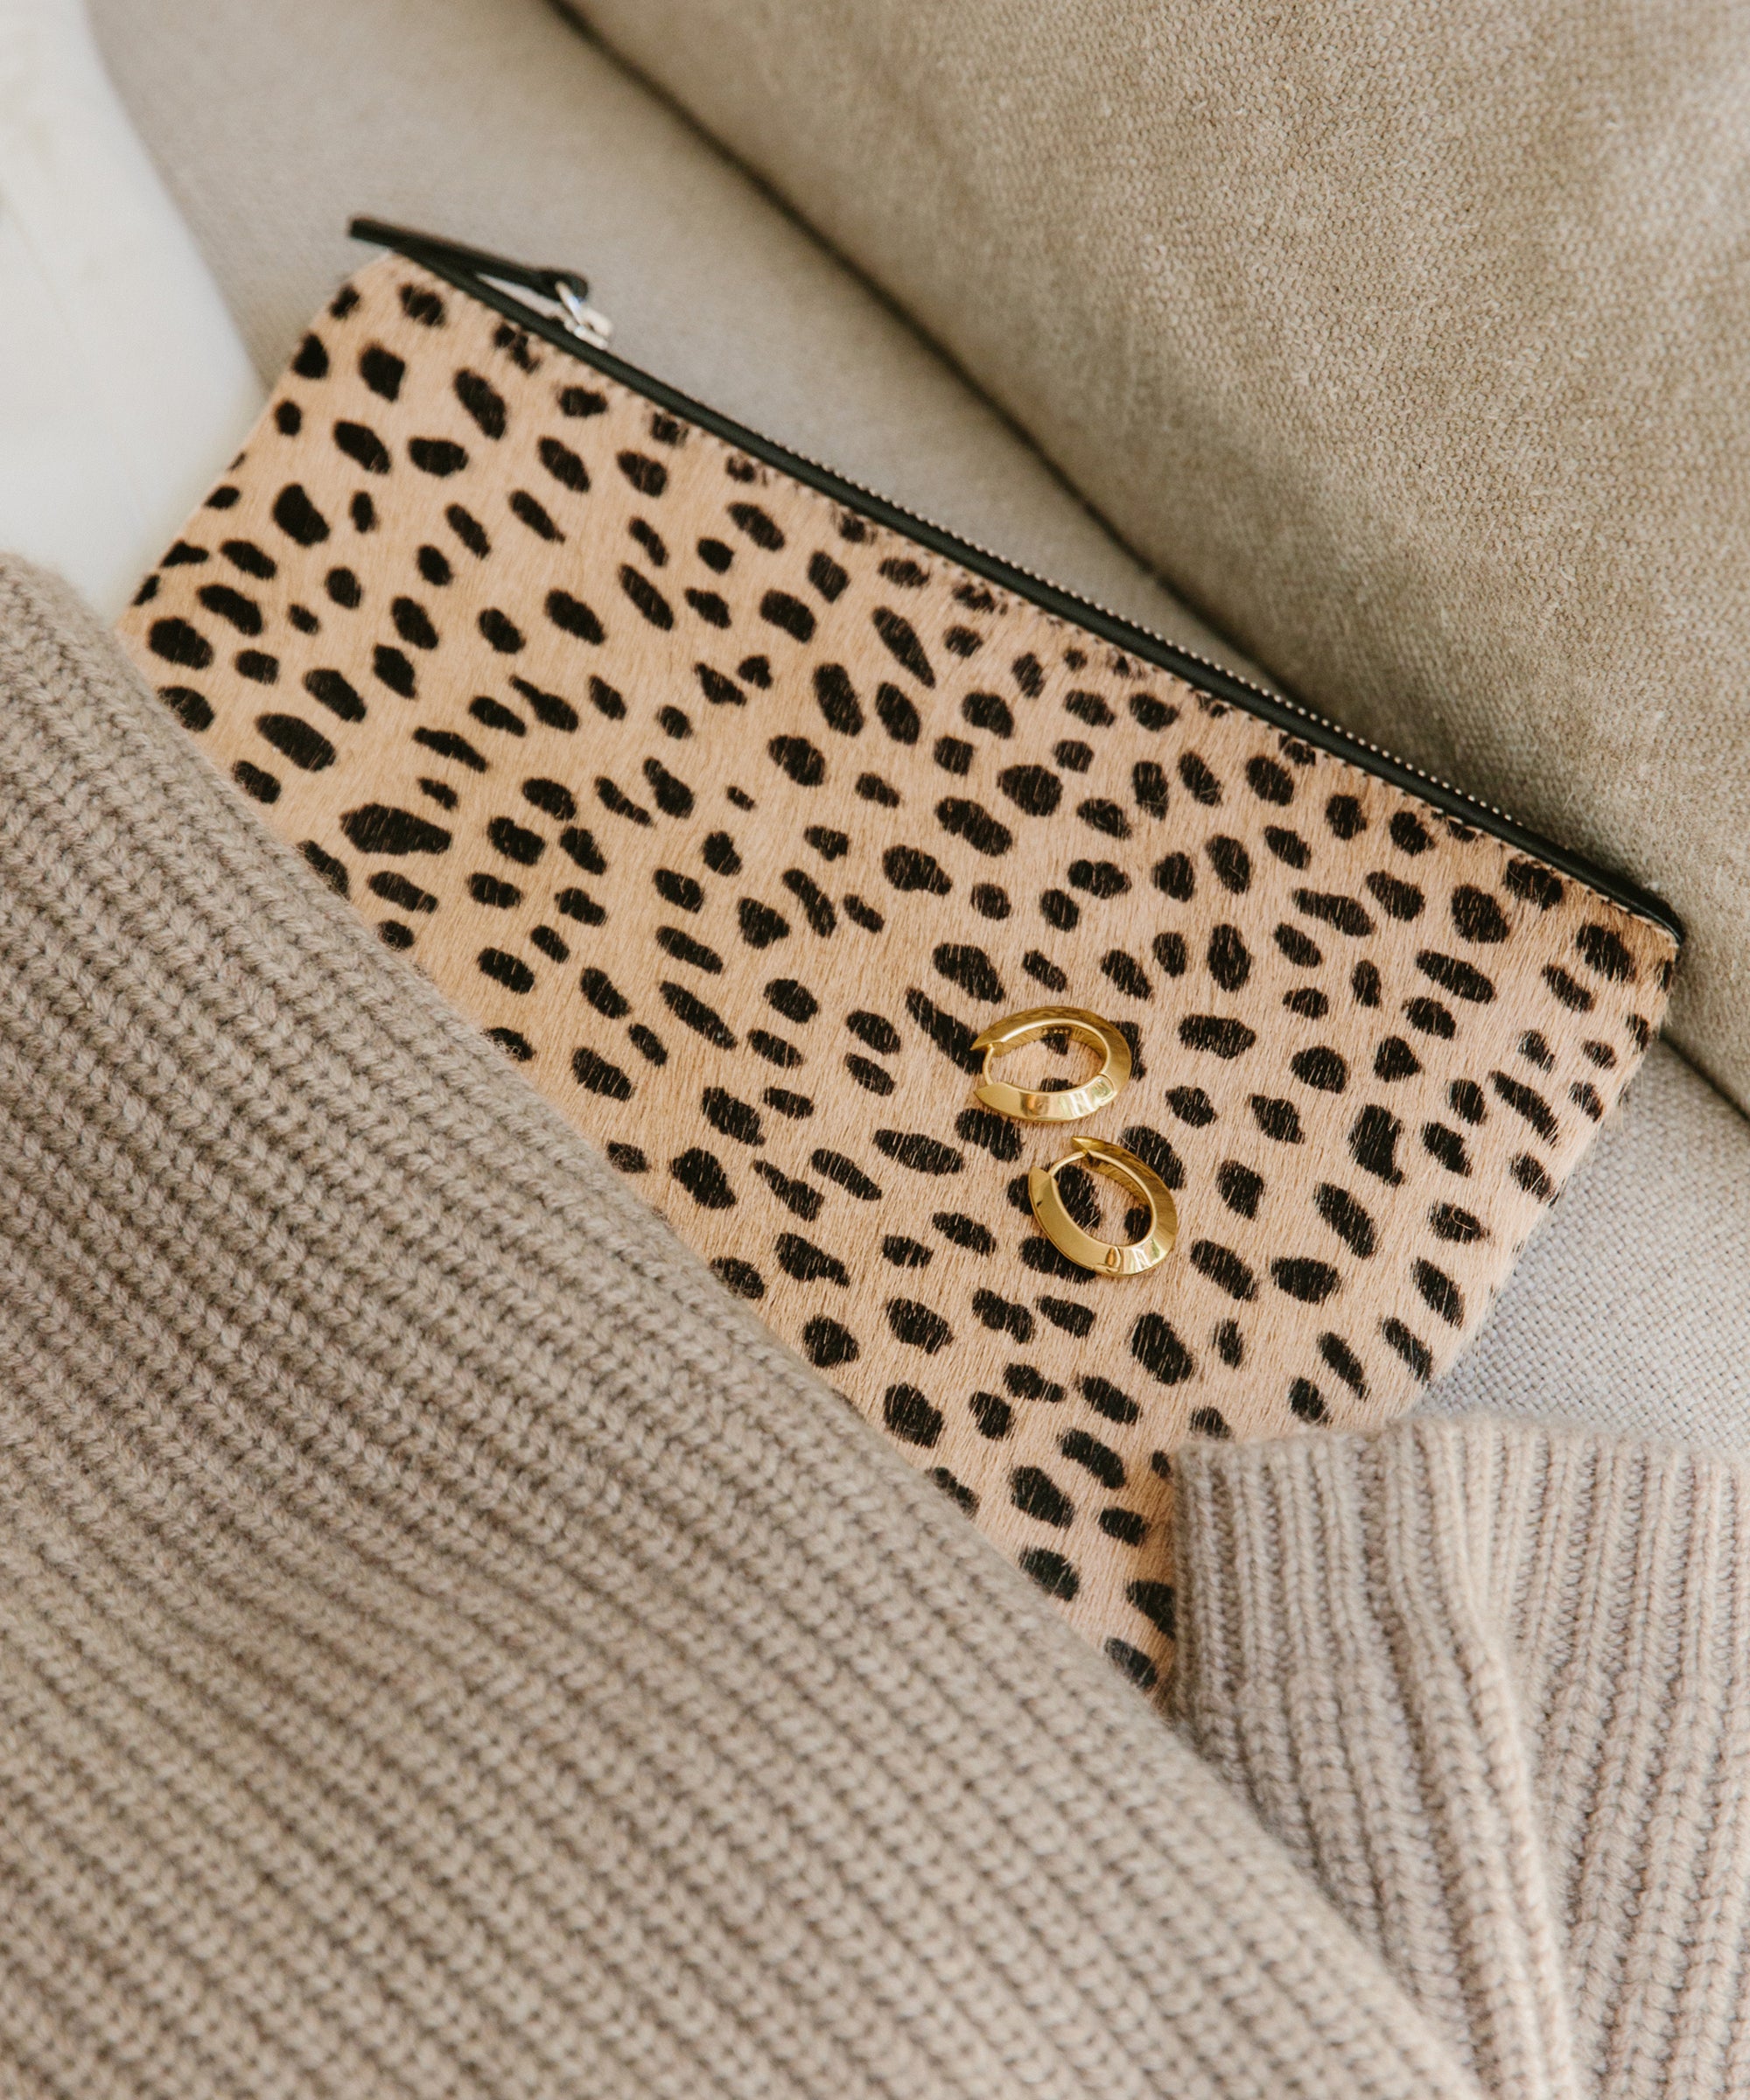 Brown Square Leopard Printed Clutch Purse Zipper Envelope Handbags